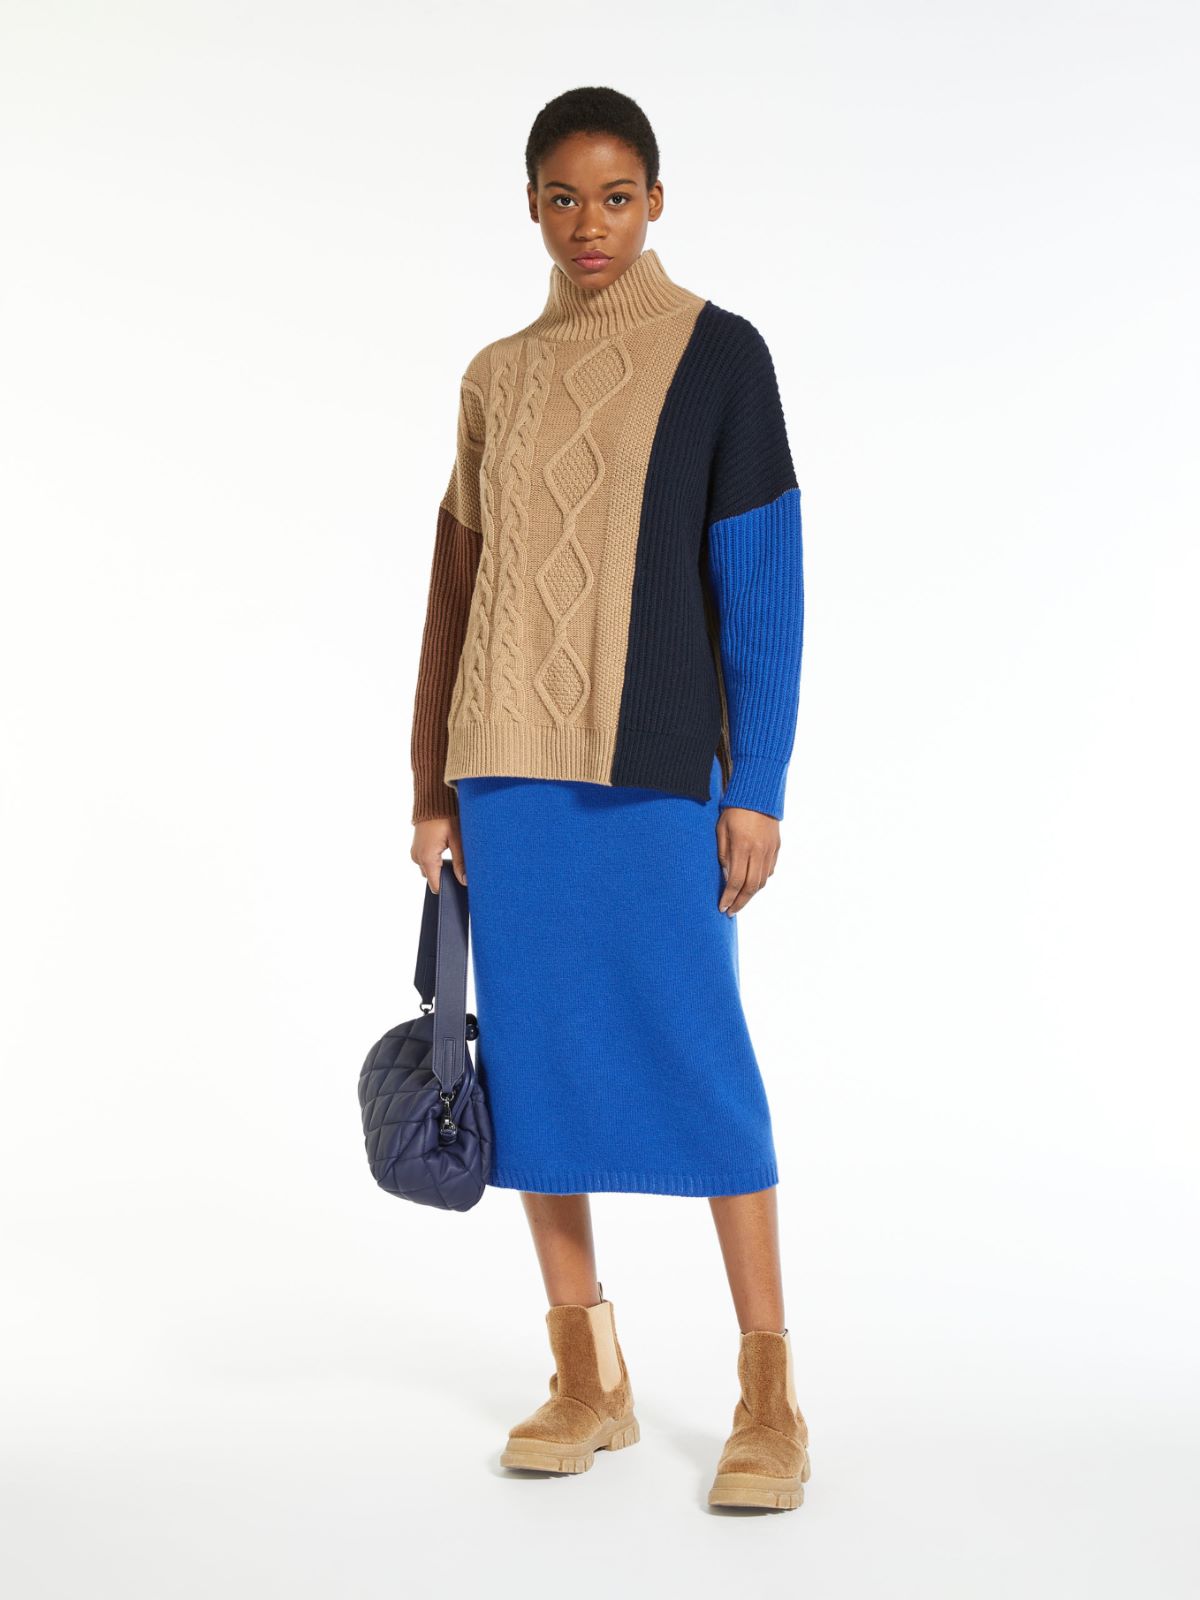 Wool yarn skirt, cornflower blue